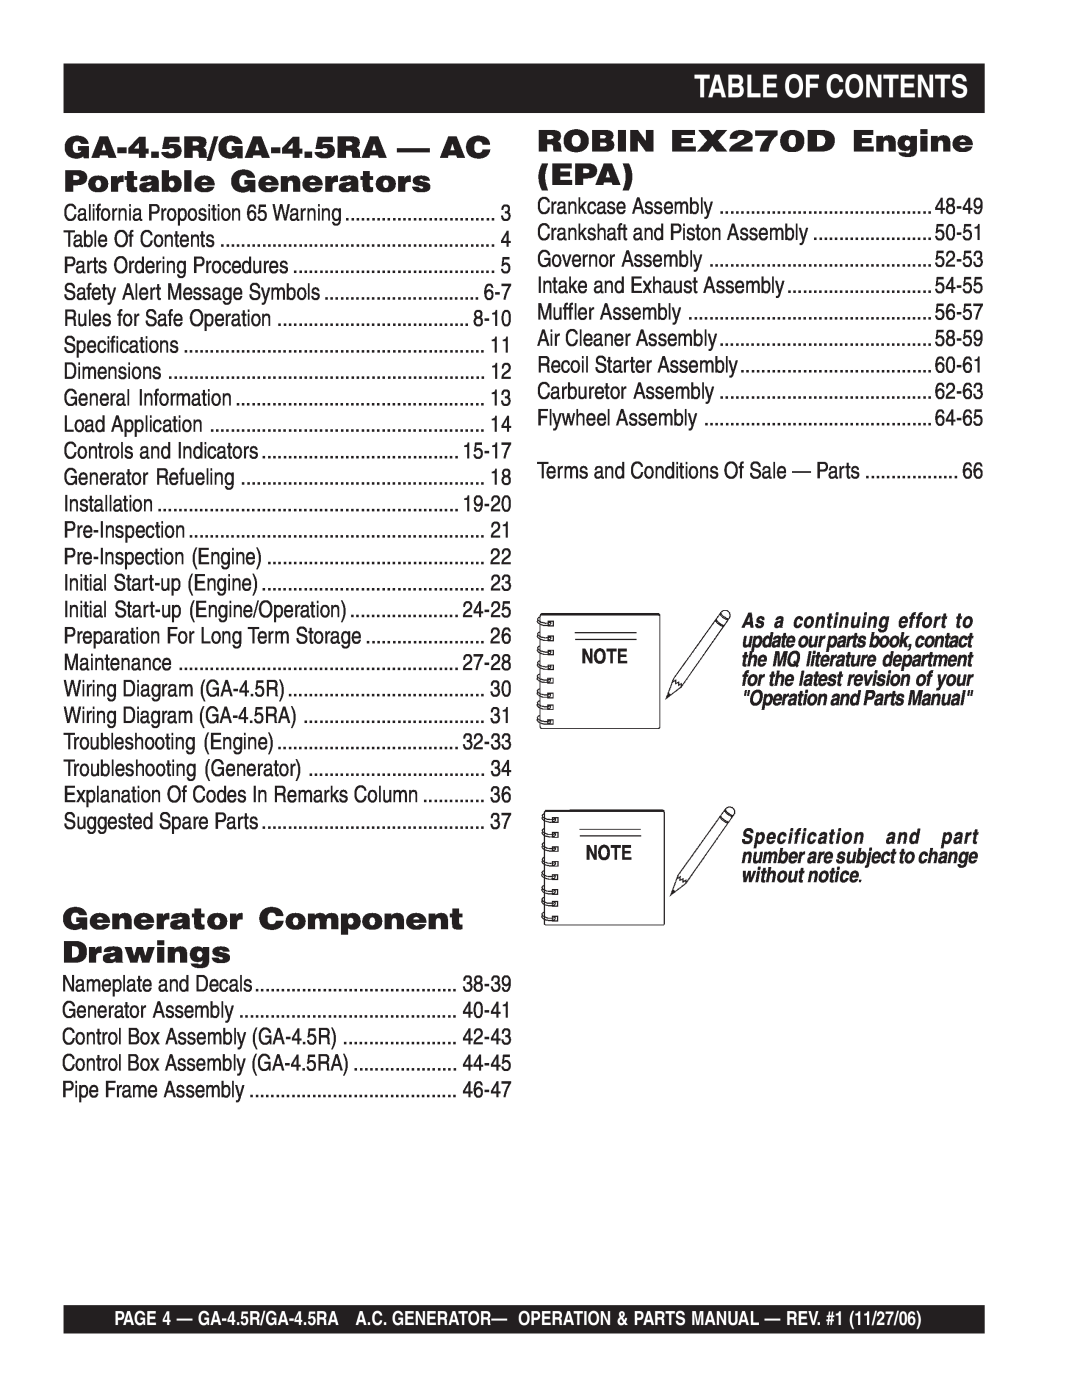 Multiquip GA4.5RA Table Of Contents, GA-4.5R/GA-4.5RA - AC Portable Generators, Generator Component Drawings, 8-10 